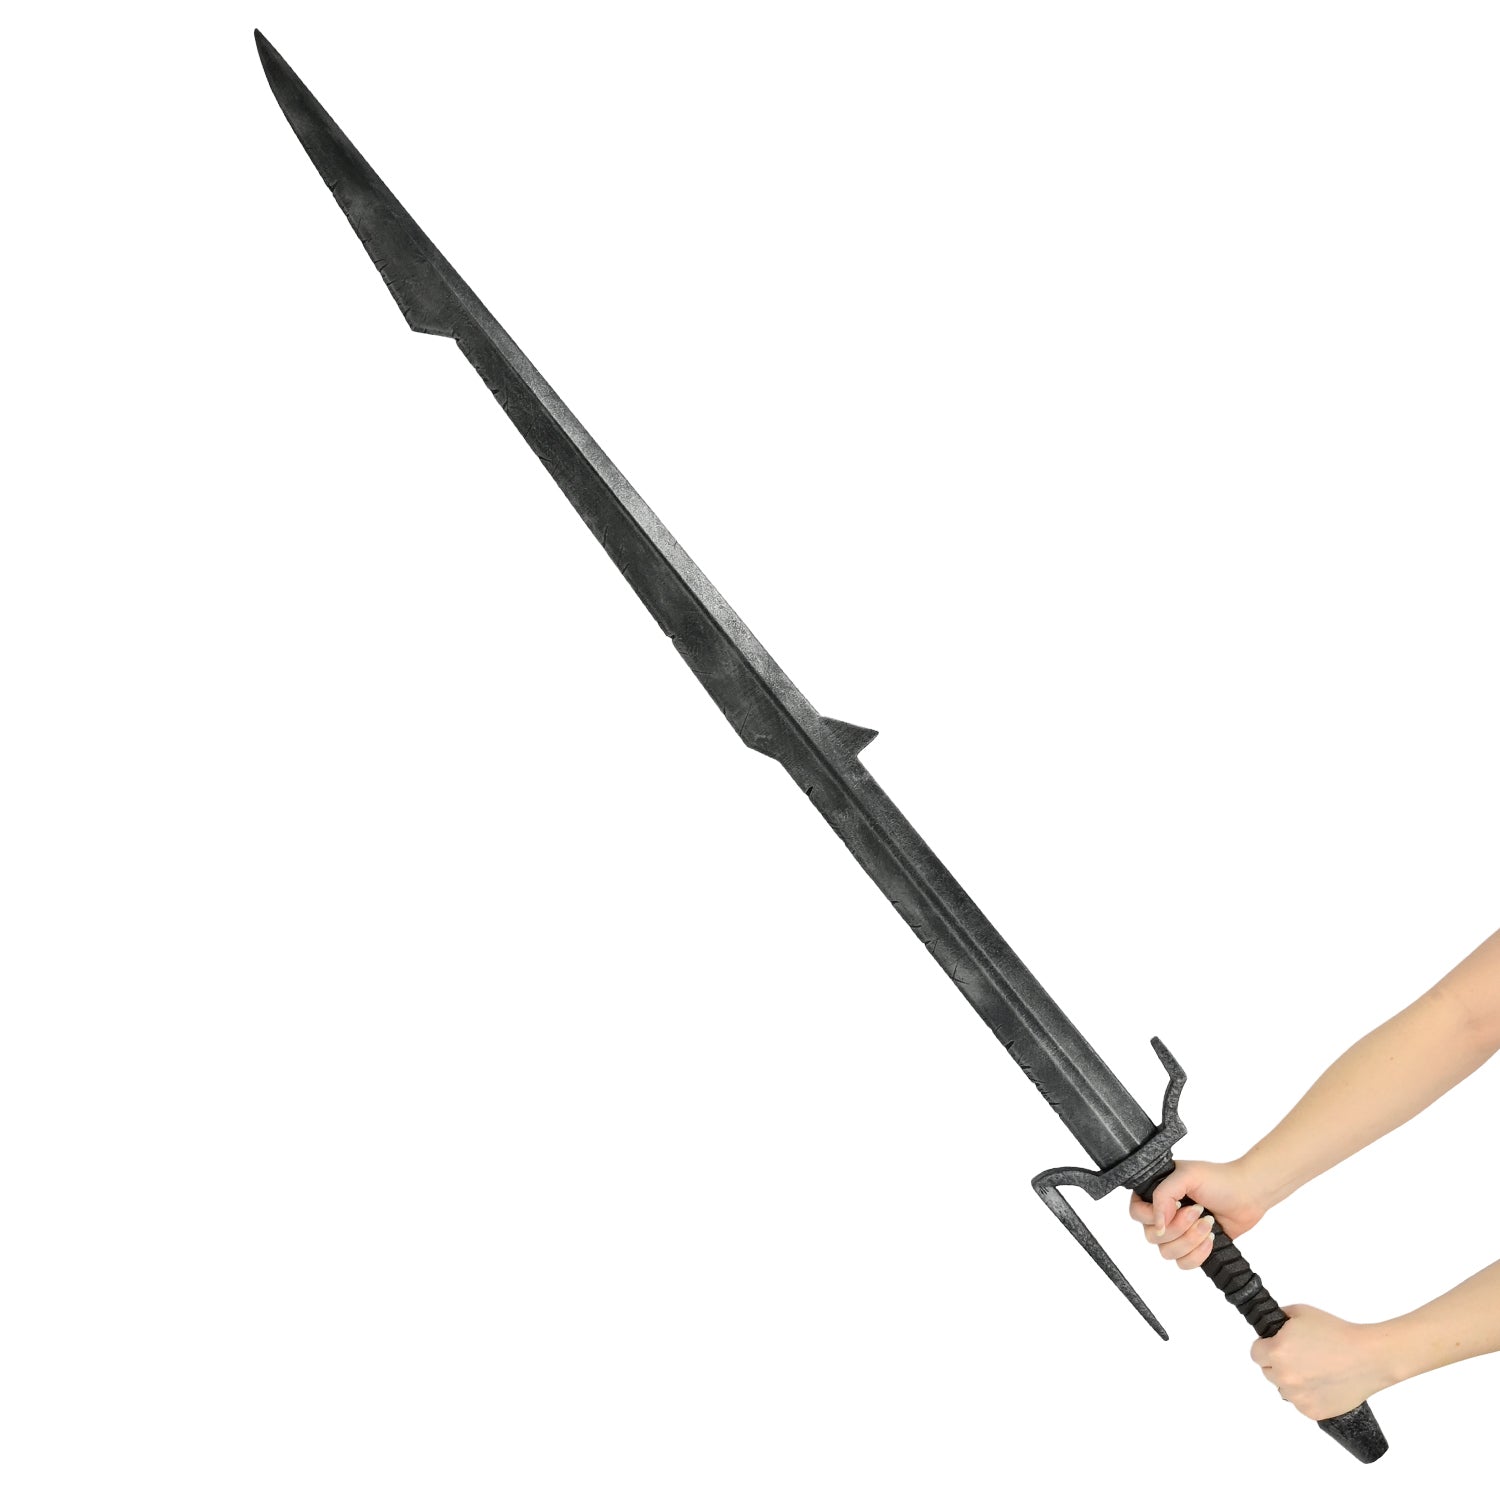 Eredin's Sword - Reforged